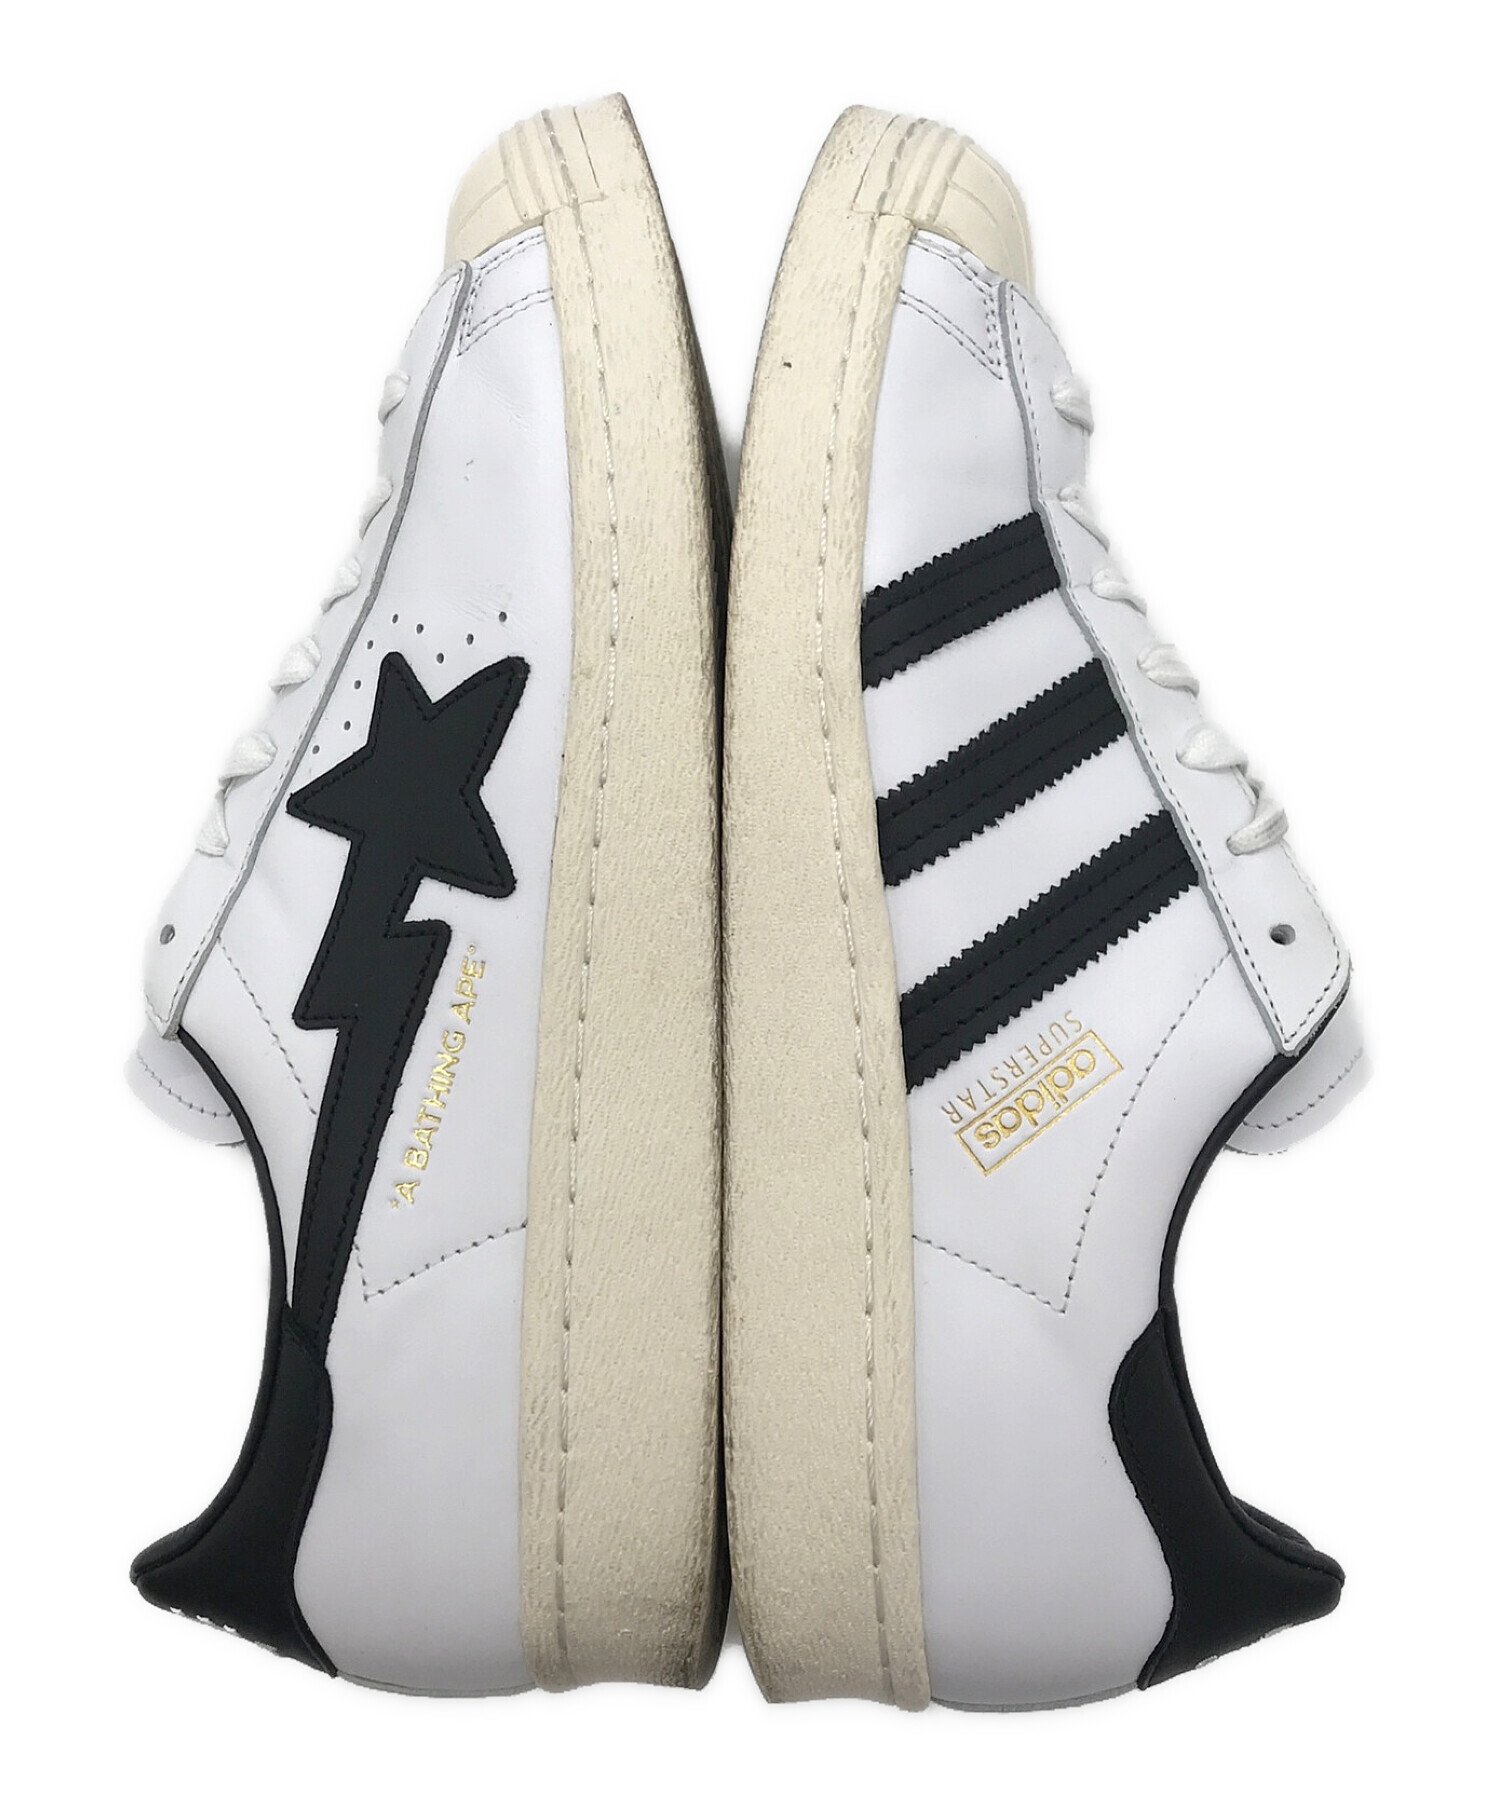 Superstar 80s BAPE White adidas 27cm US9